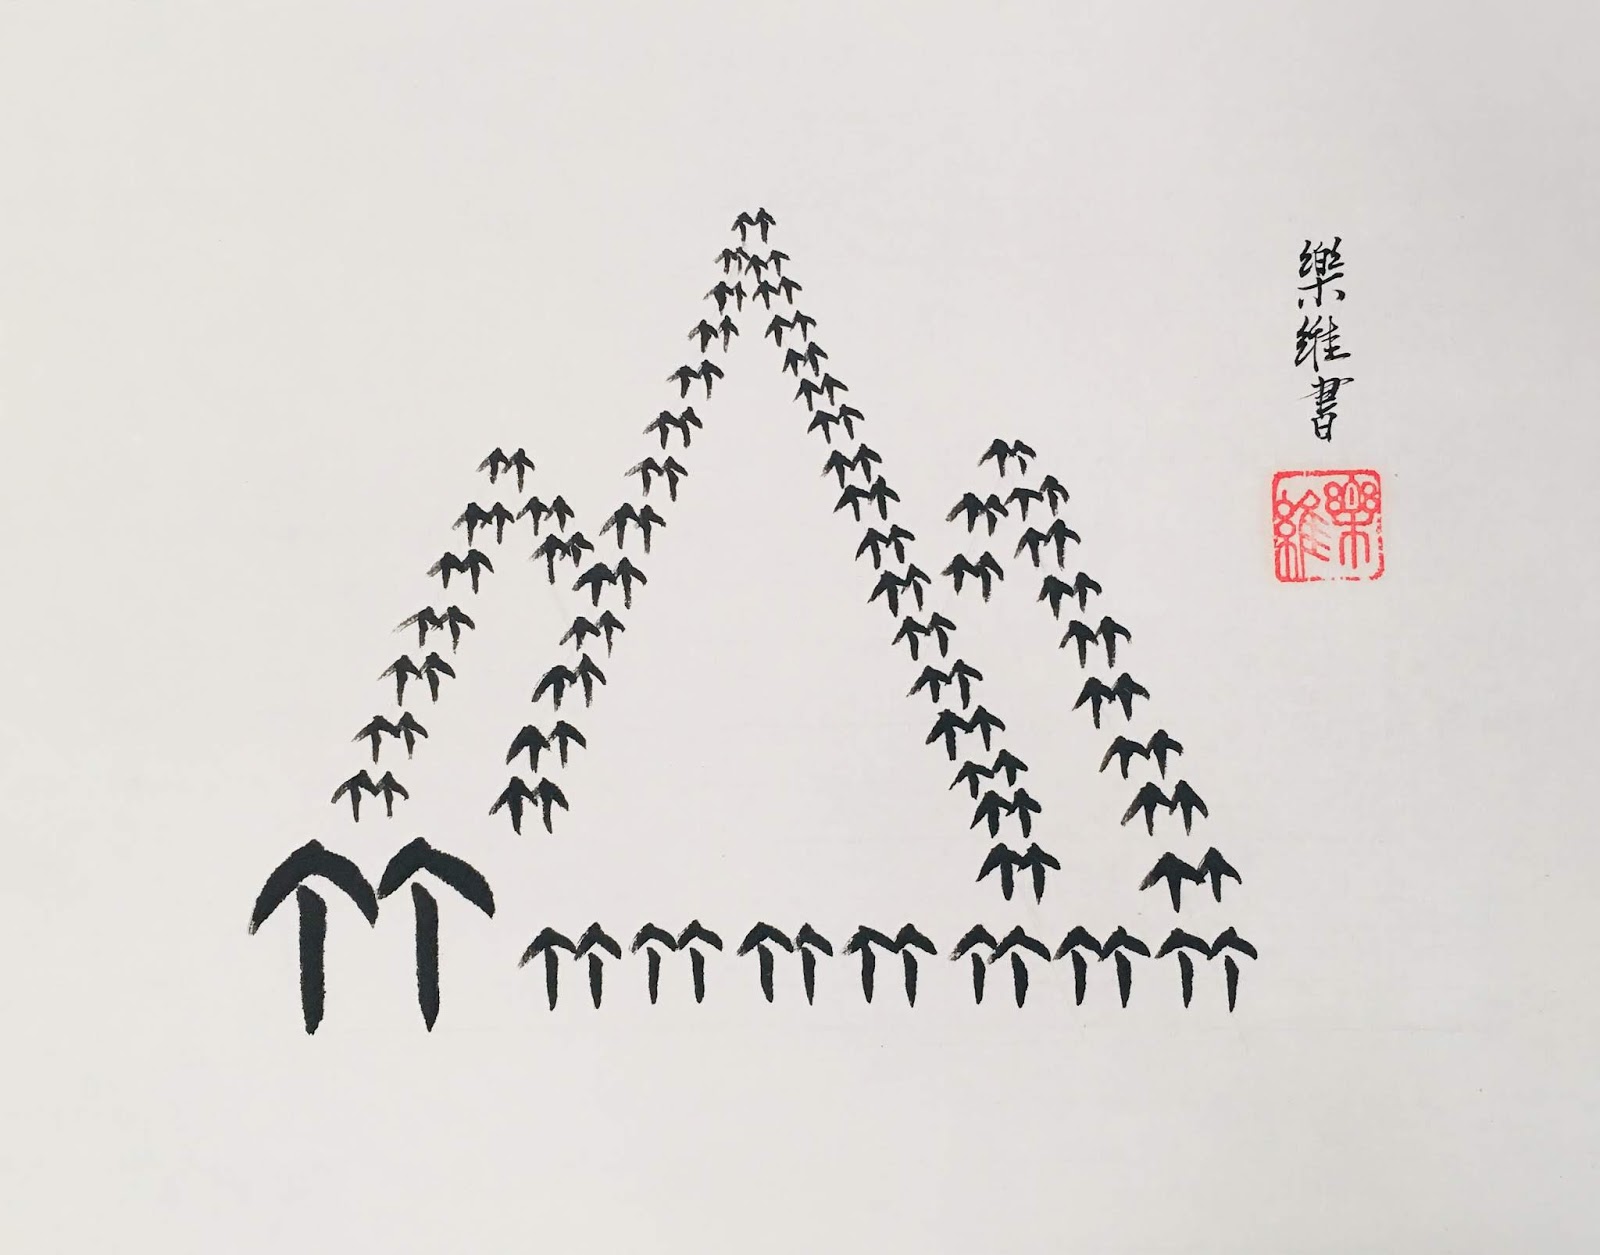 Eddie Tang S Blog Chinese Calligraphy